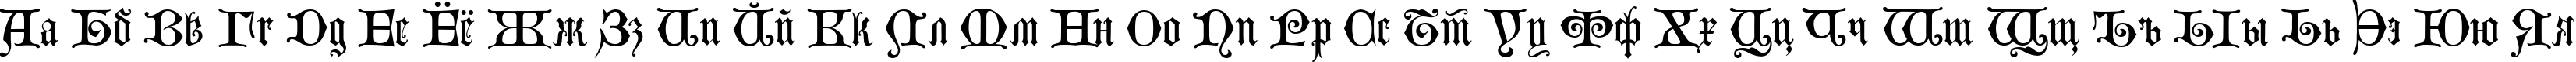 Пример написания русского алфавита шрифтом Lombardina Two